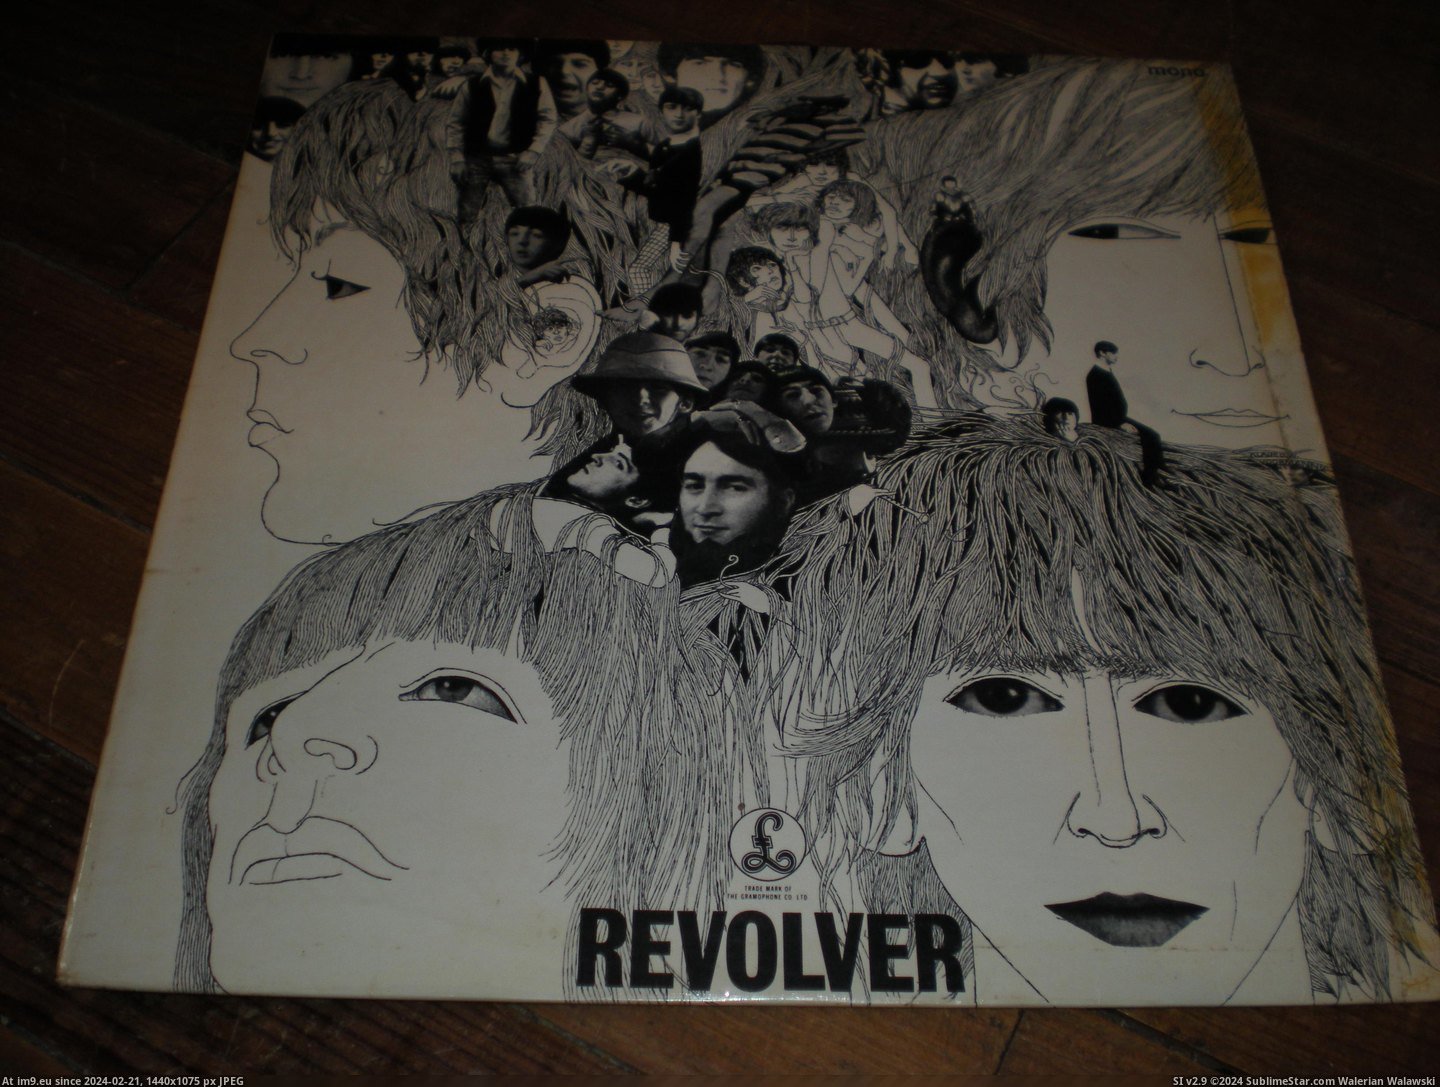  #Revolver  Revolver-2-2 6 Pic. (Image of album new 1))